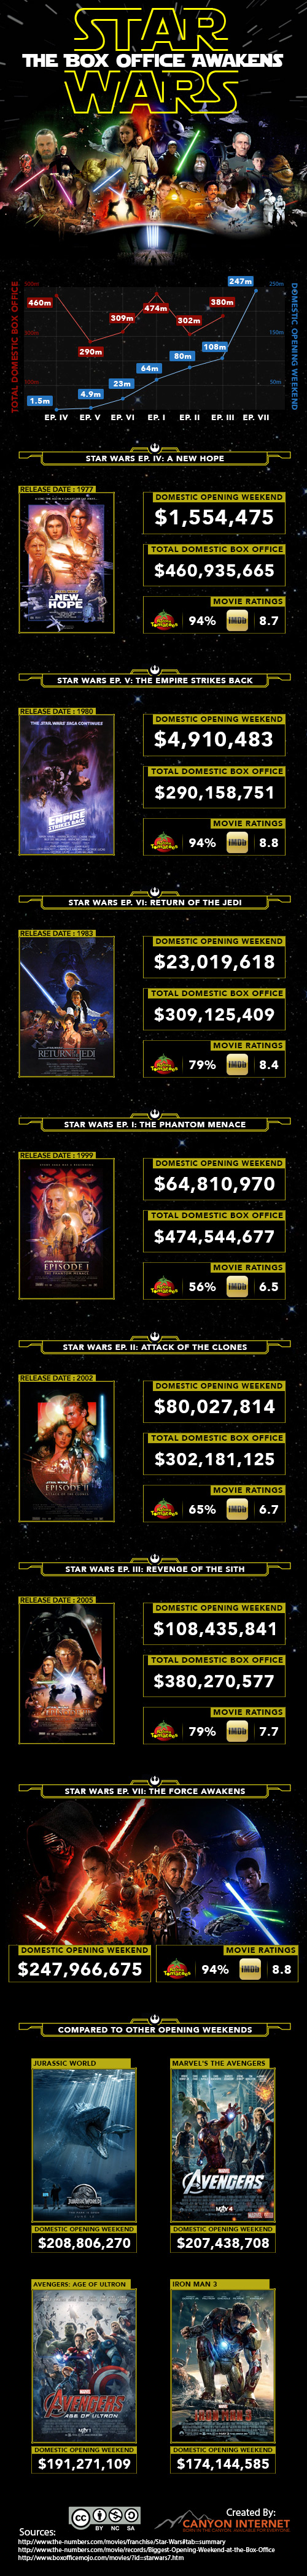 star-wars-infograpic